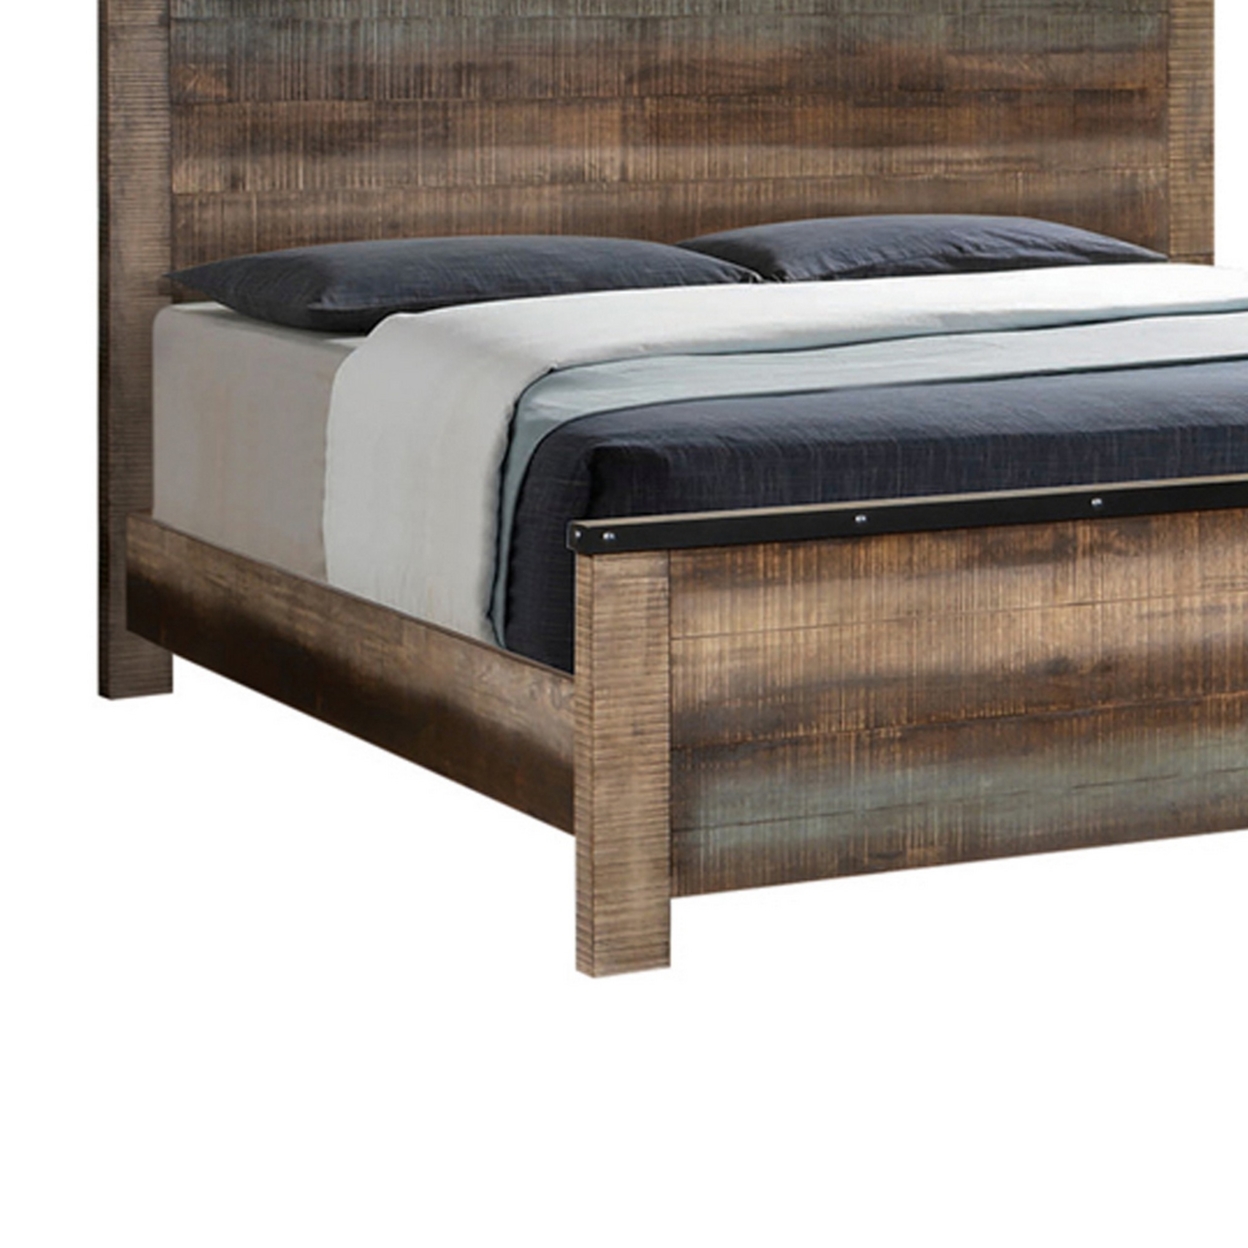 Plank Style Rustic Queen Bed With Metal Edge, Multicolor- Saltoro Sherpi